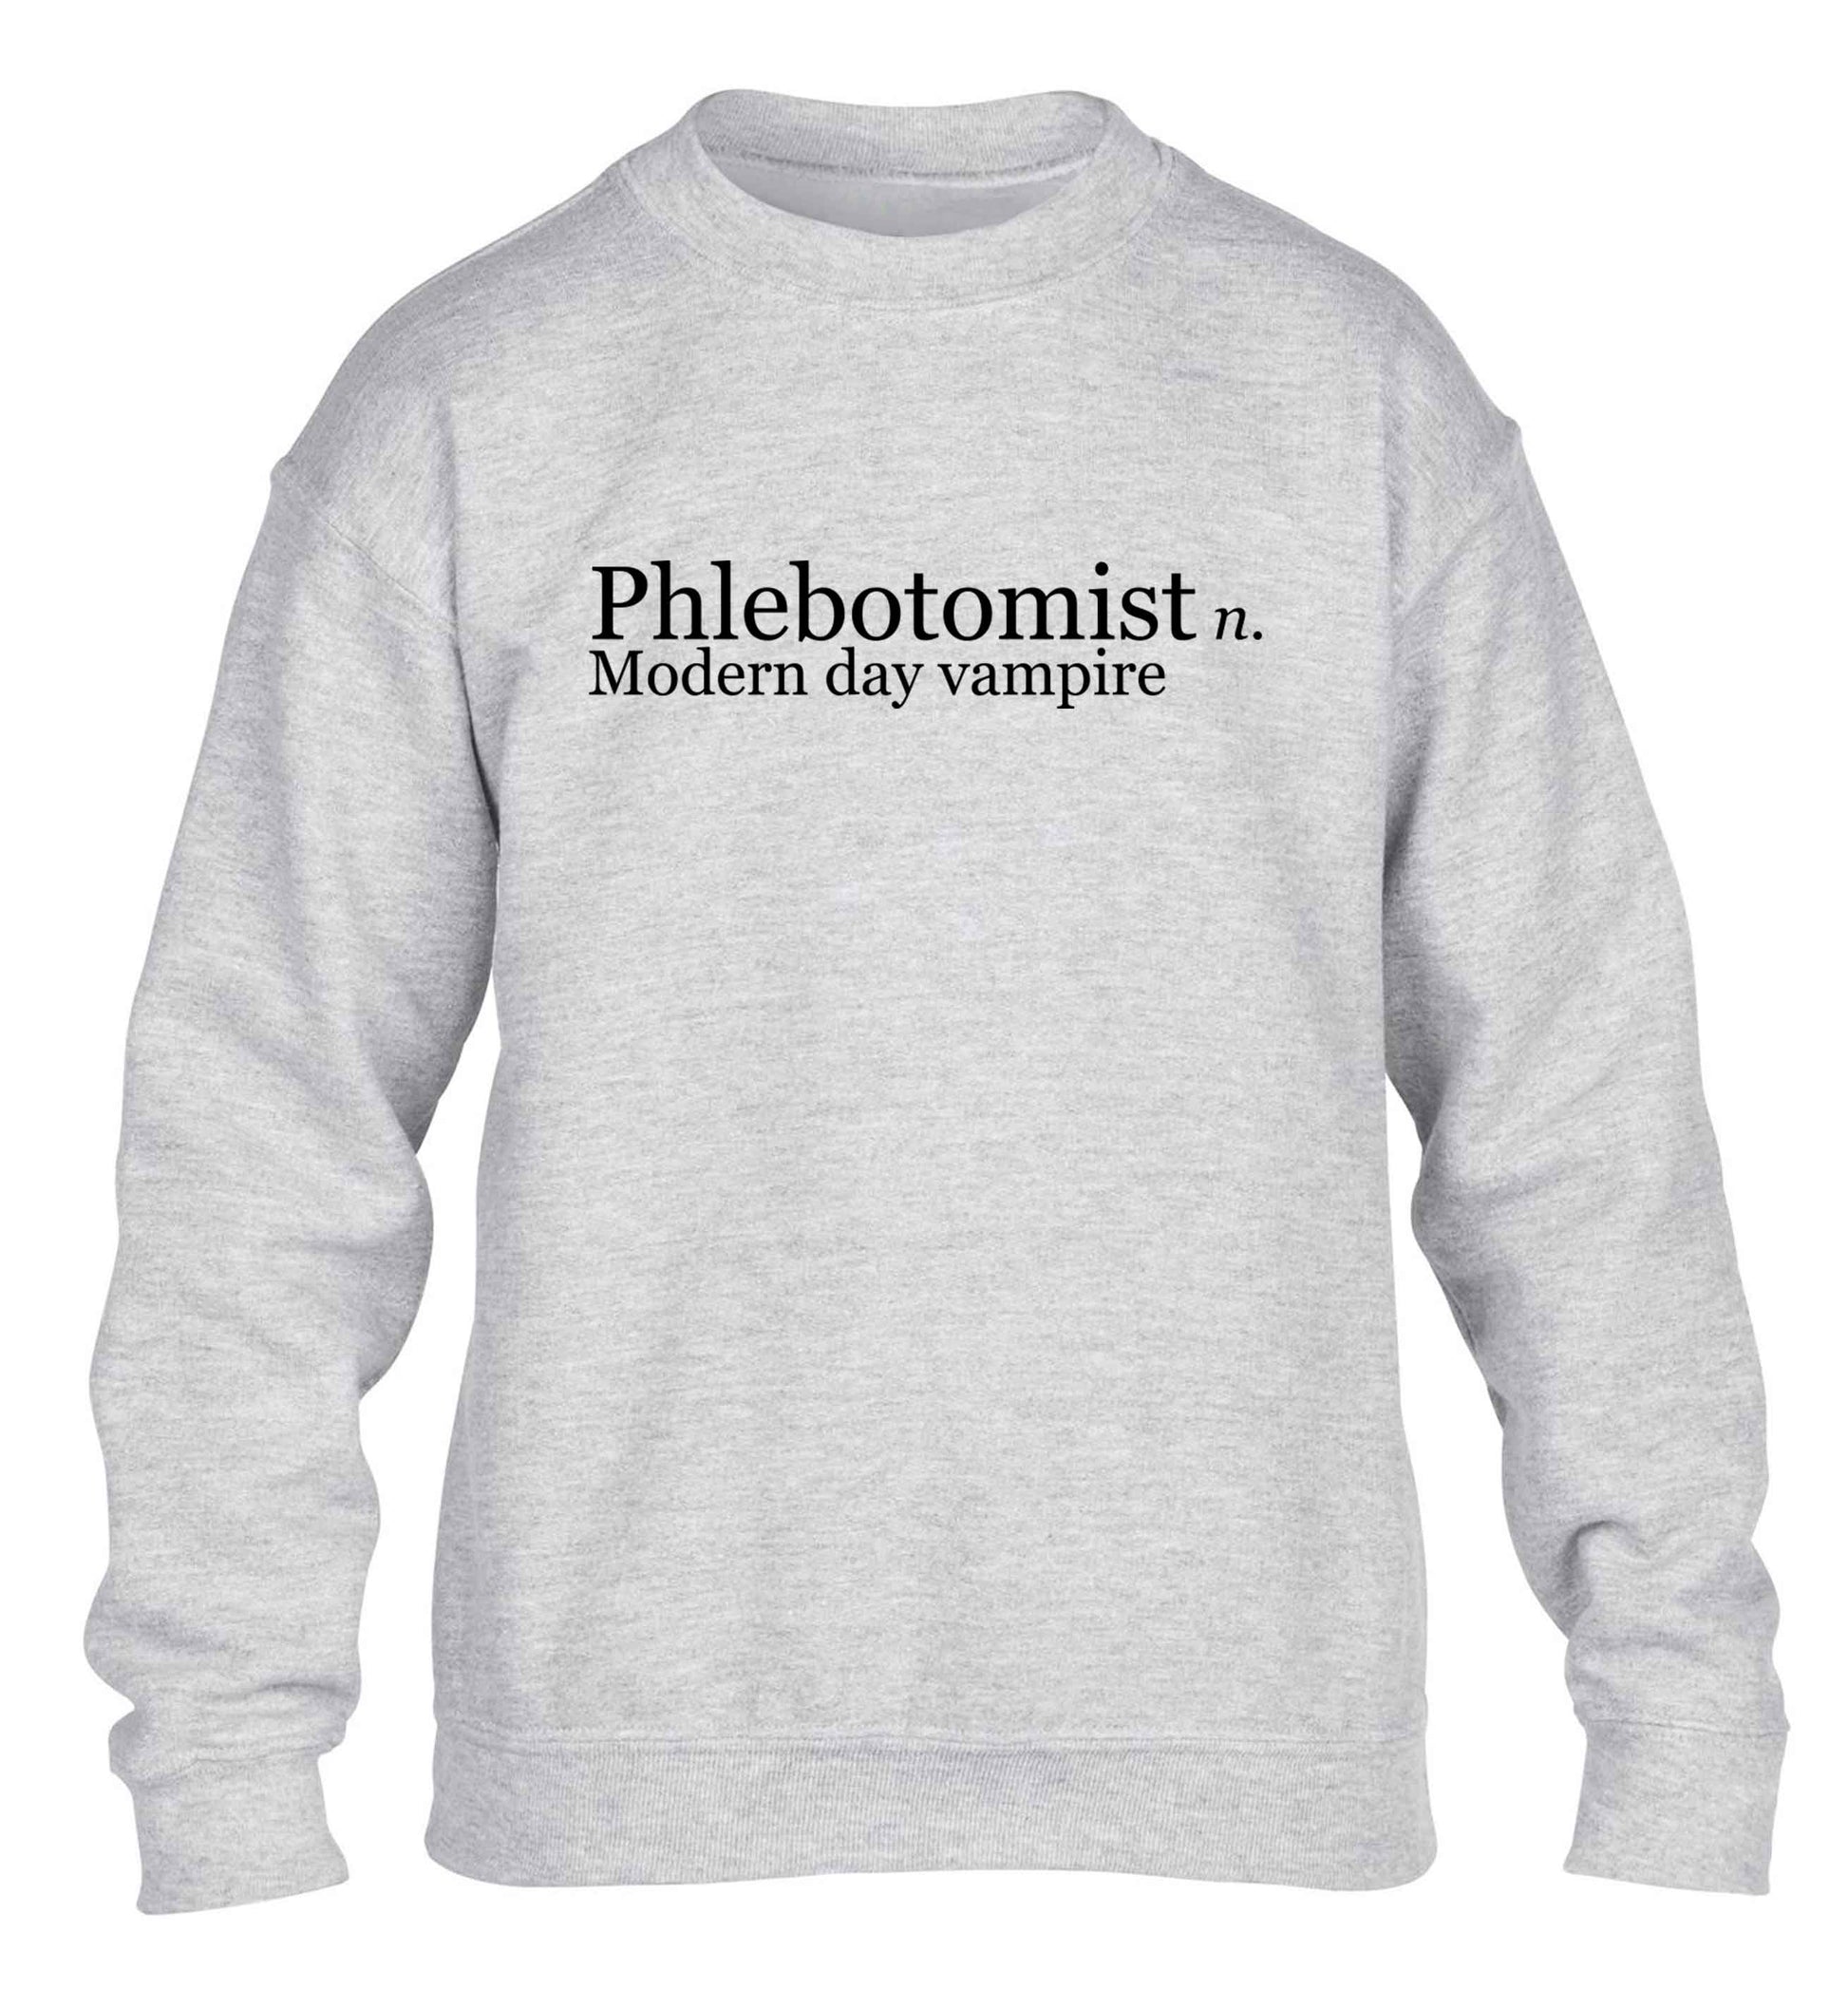 Phlebotomist - Modern day vampire children's grey sweater 12-13 Years